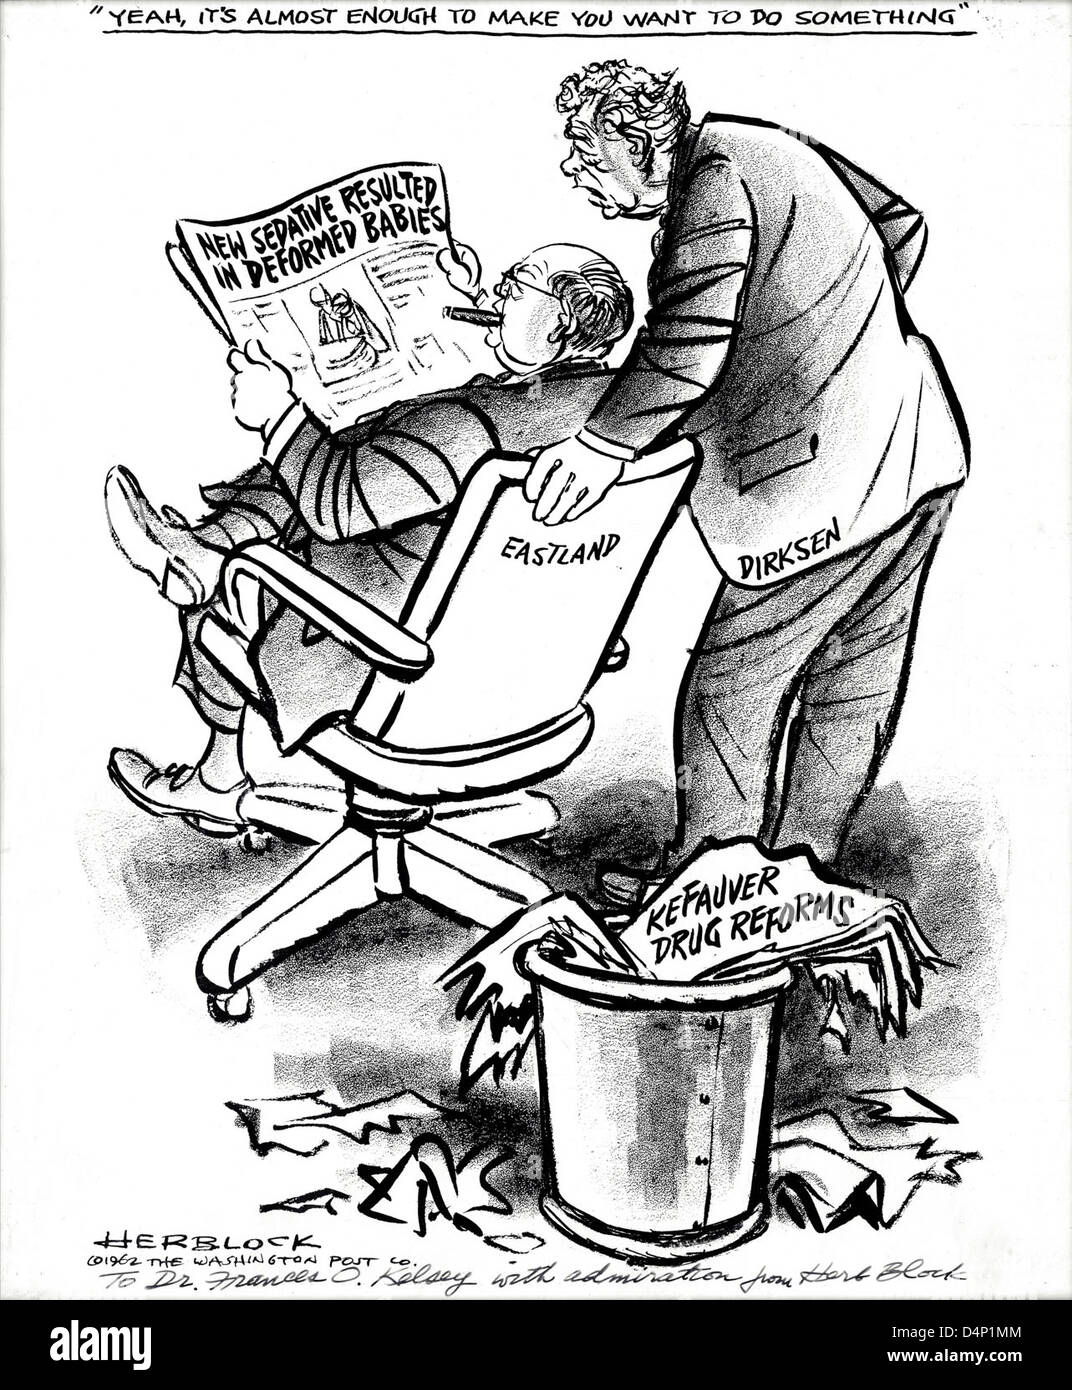 Kefauver Drug Reforms Political Cartoon (FDA 119) Stock Photo